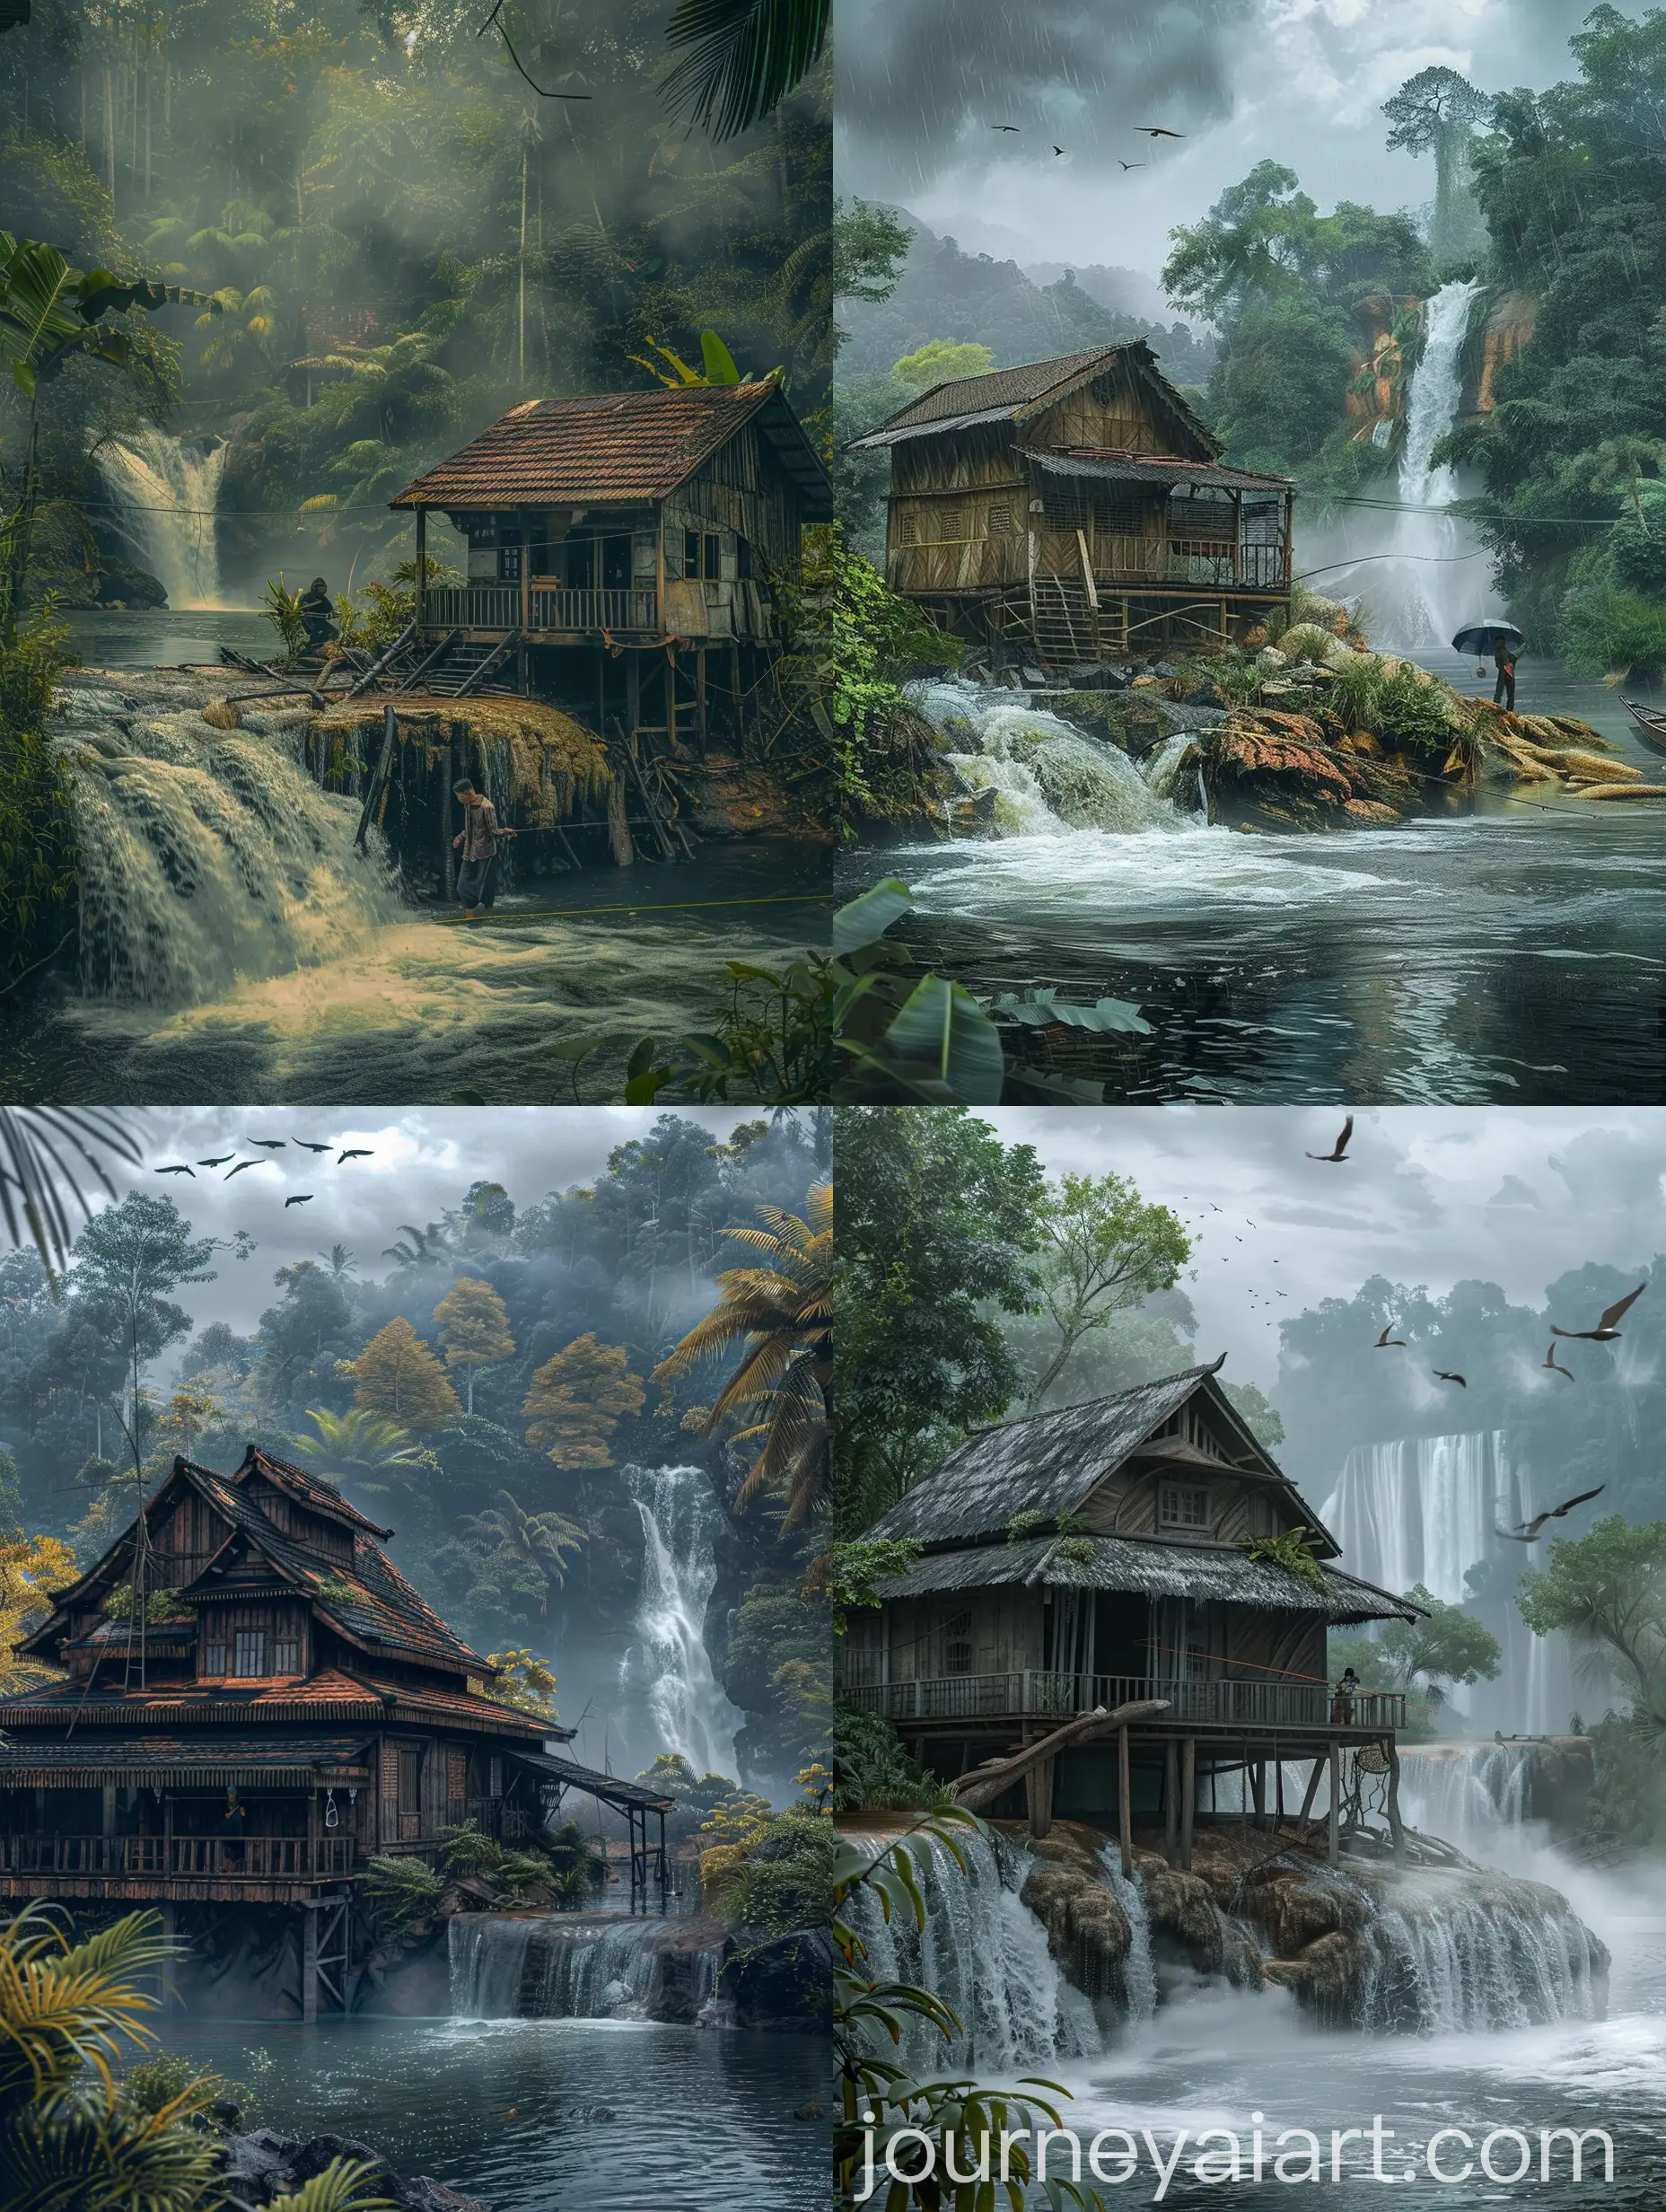 Hyperrealistic-Malaysian-Style-Wooden-House-Fishing-Scene